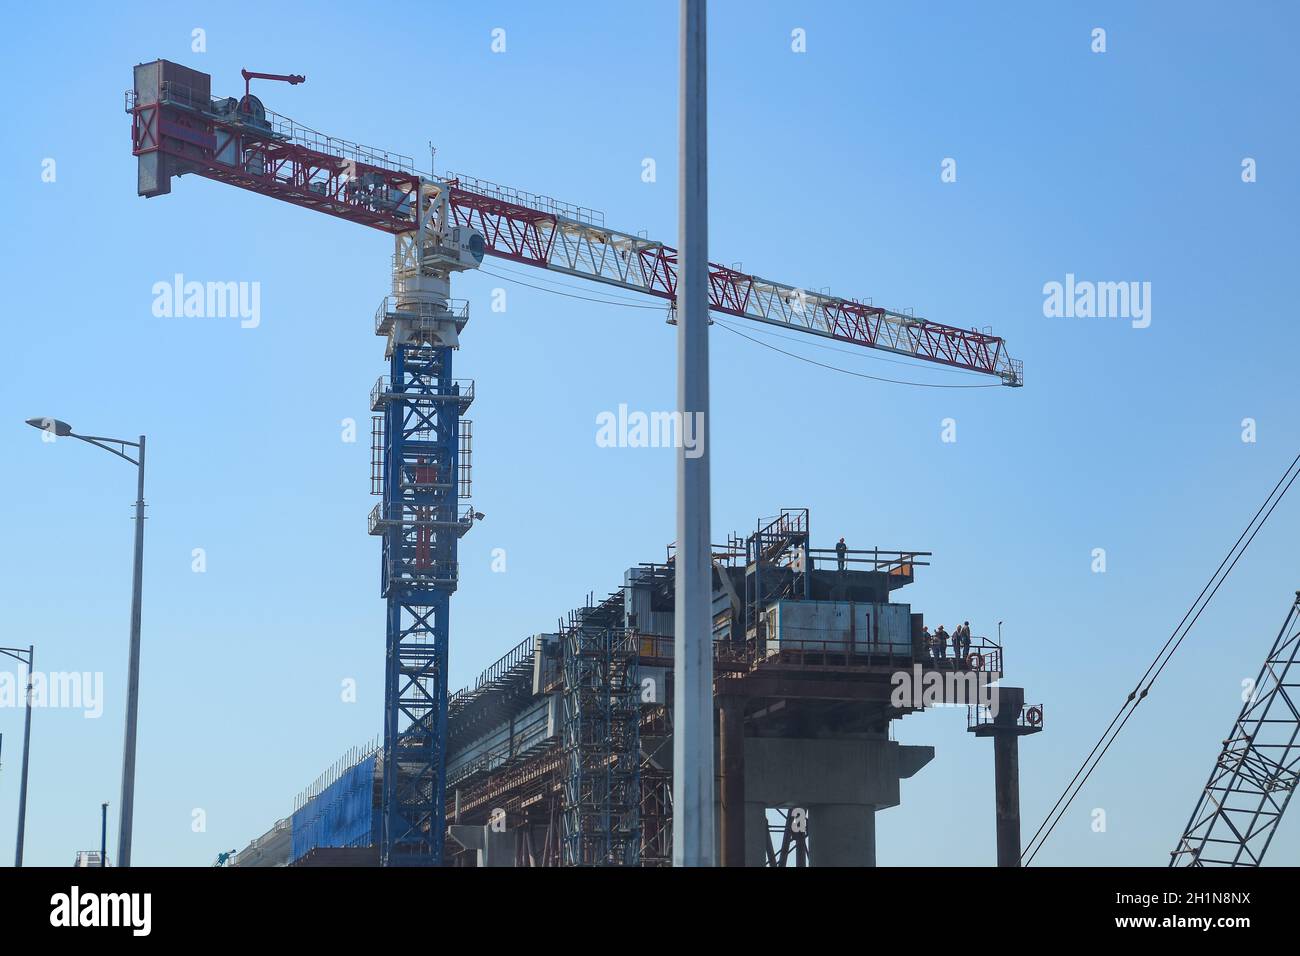 Crimean bridge, Taman, Russia - July 9, 2018: Construction of the Crimean bridge. Lift cranes and railway bridge elements. Construction and repair. Dr Stock Photo